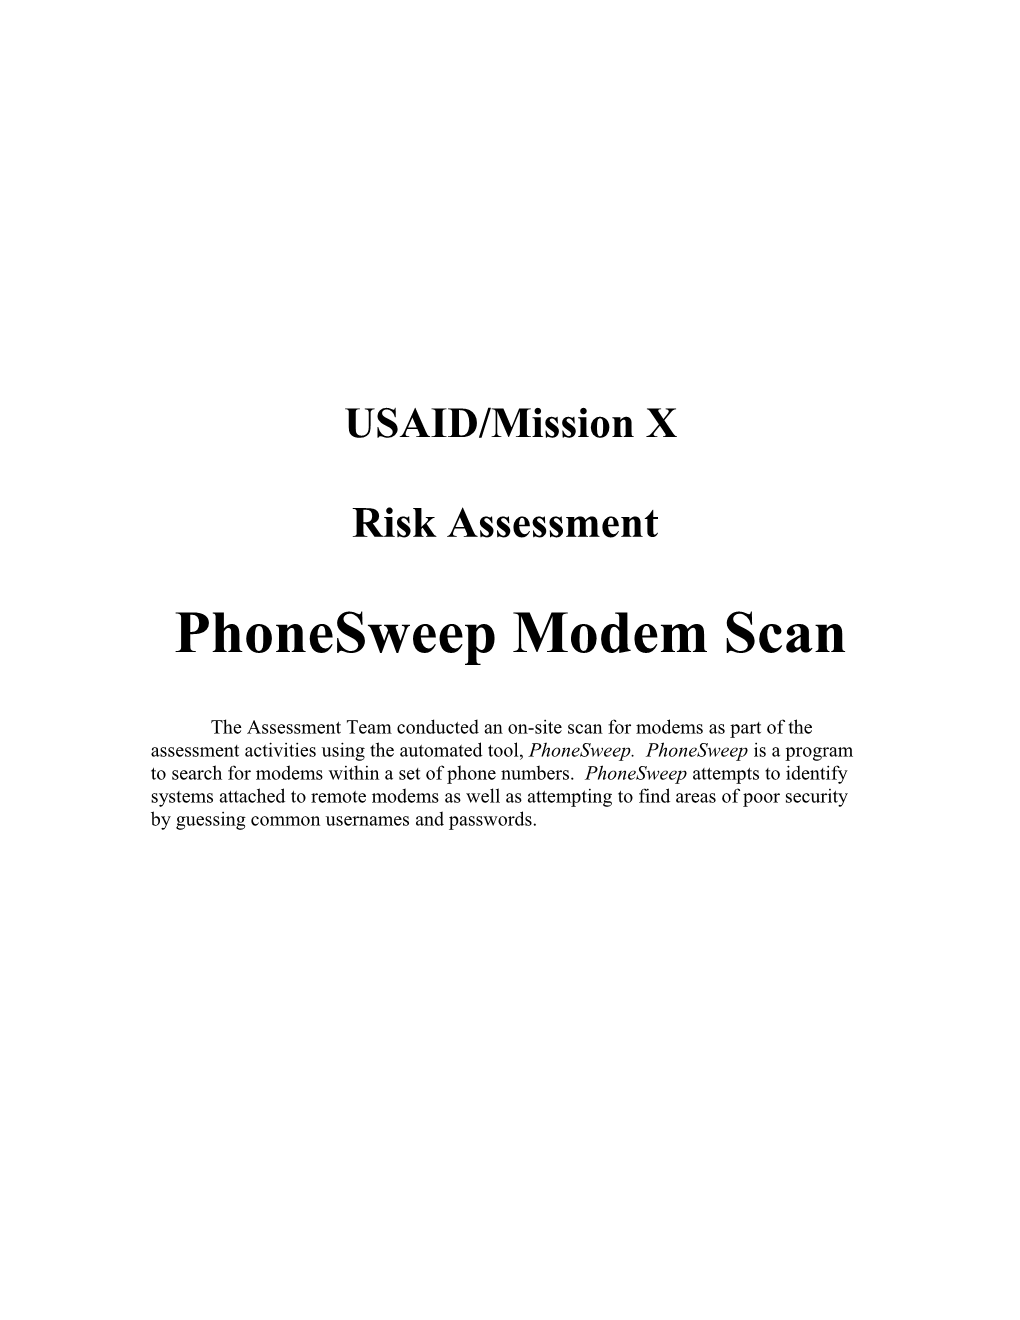 Executive Summary of Phonesweep Scan